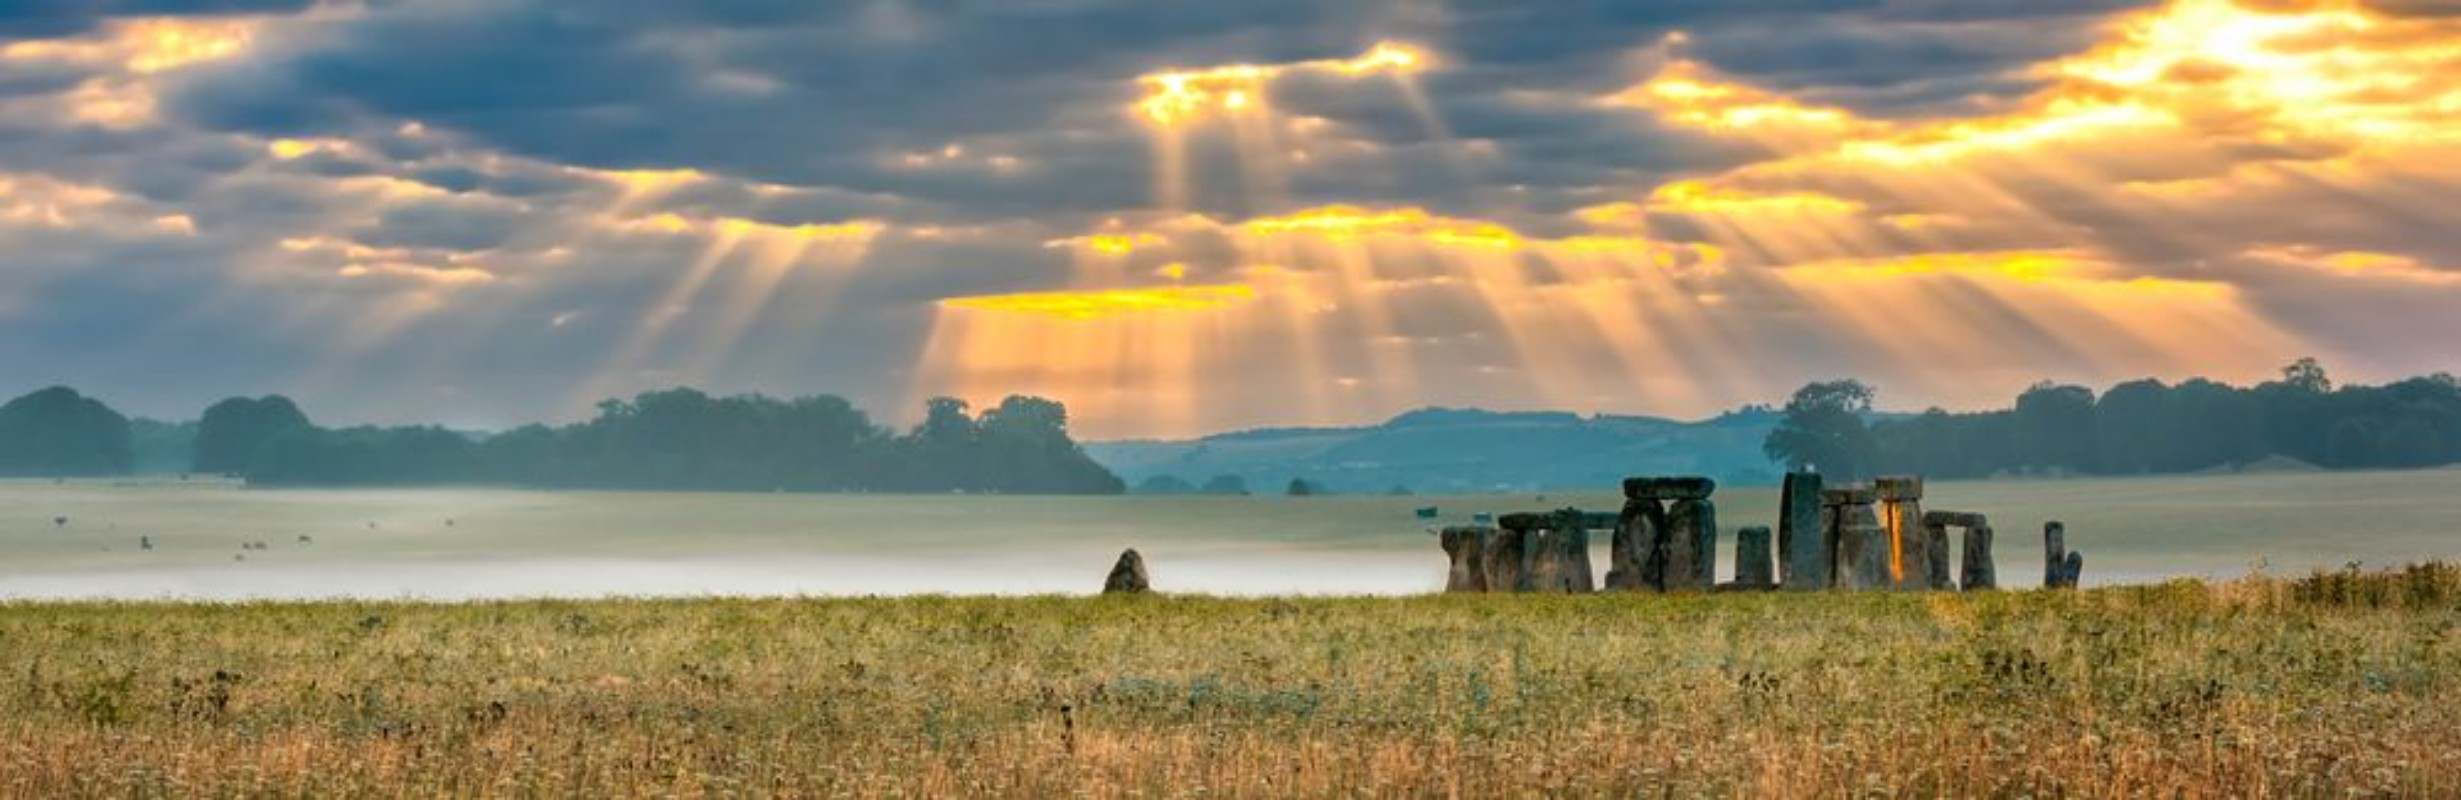 Afbeeldingen van Amesbury Wiltshire United Kingdom - August 14 2016 Cloudy sunrise over Stonehenge - prehistoric megalith monument arranged in circle